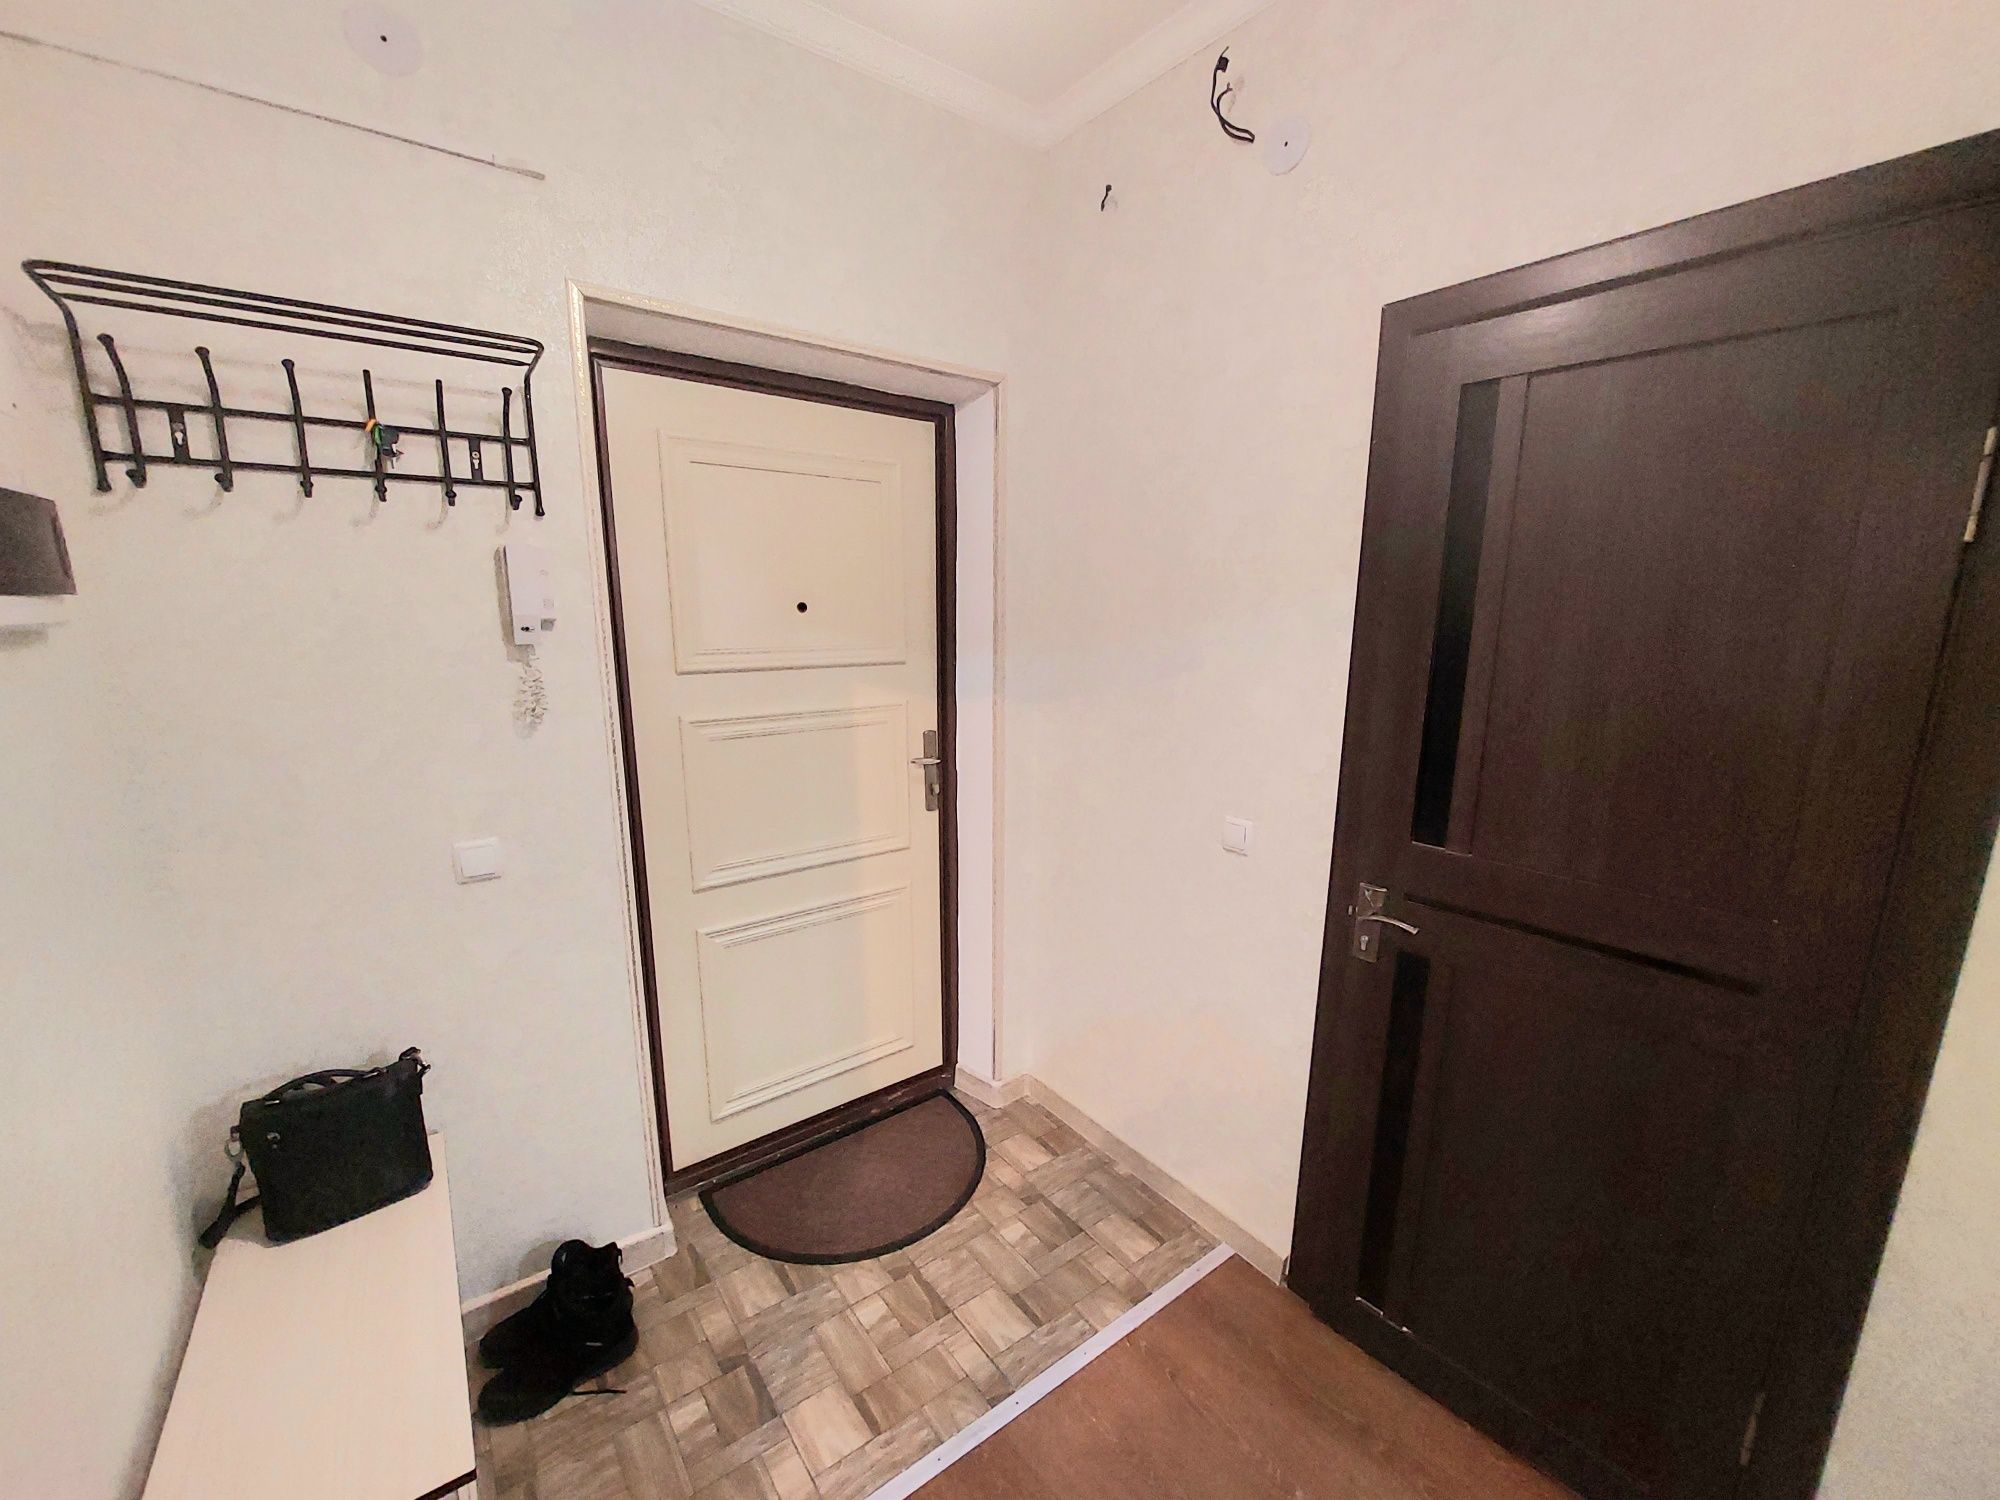 Сдается 1 комнатная квартира в ЖК "Атамекен".